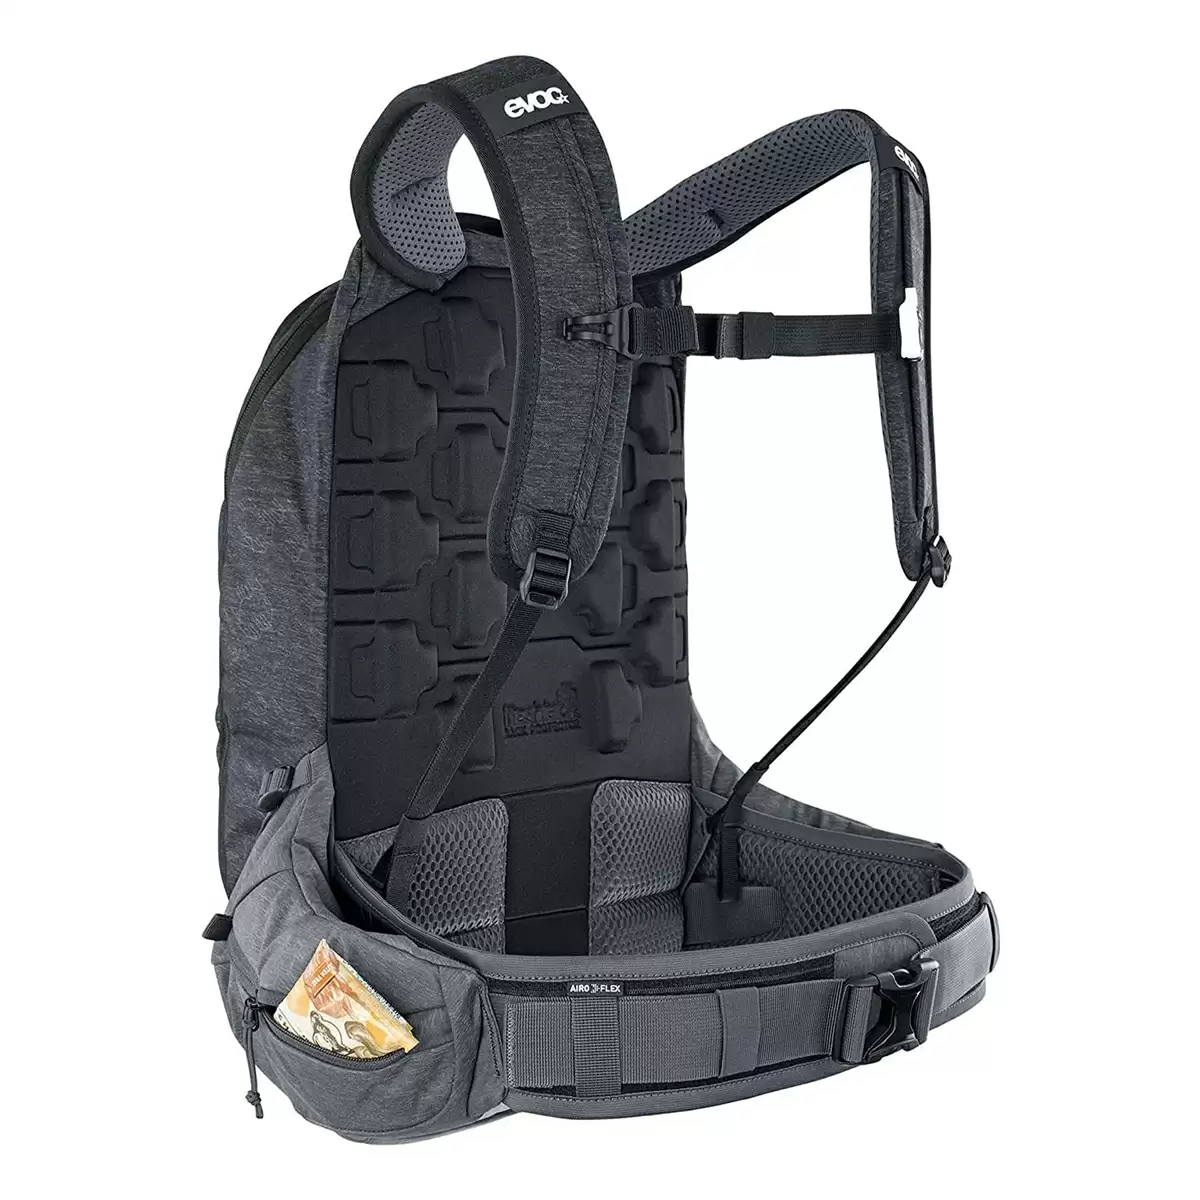 Backpack Trail Pro 16 litri black - carbon grey size L/XL #2